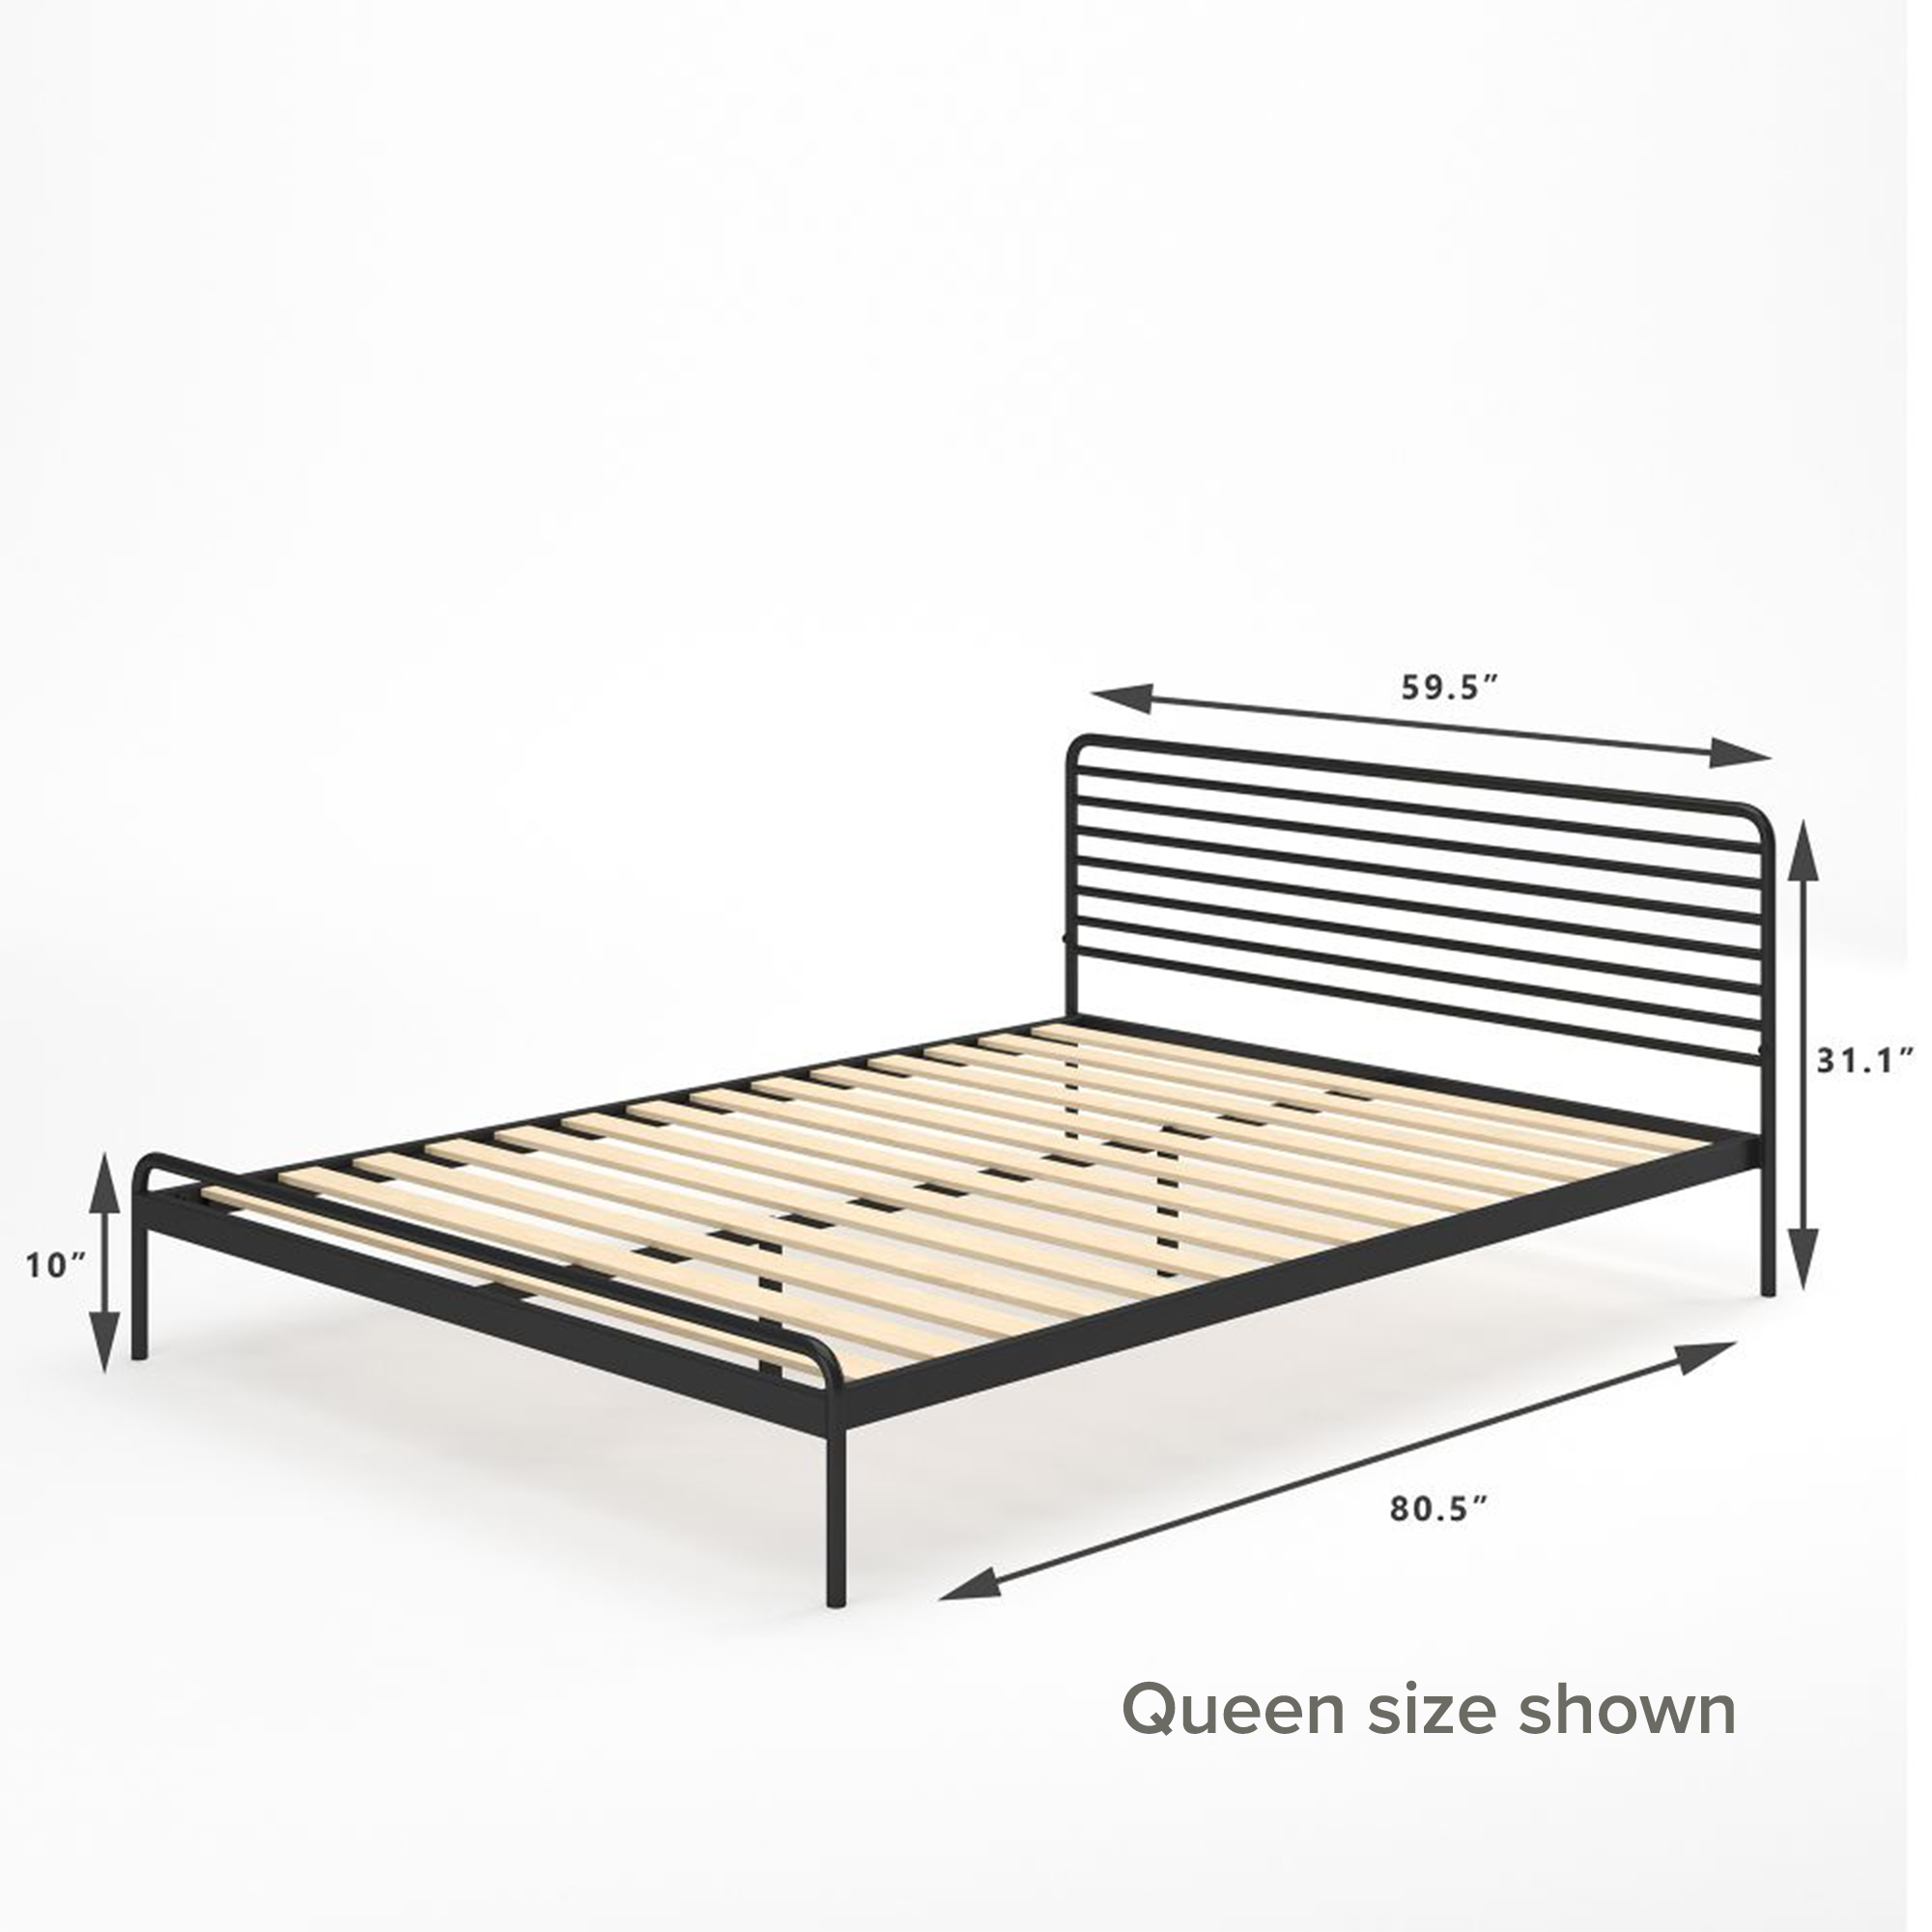 Tom Metal Platform Bed Frame Dimensions queen size shown